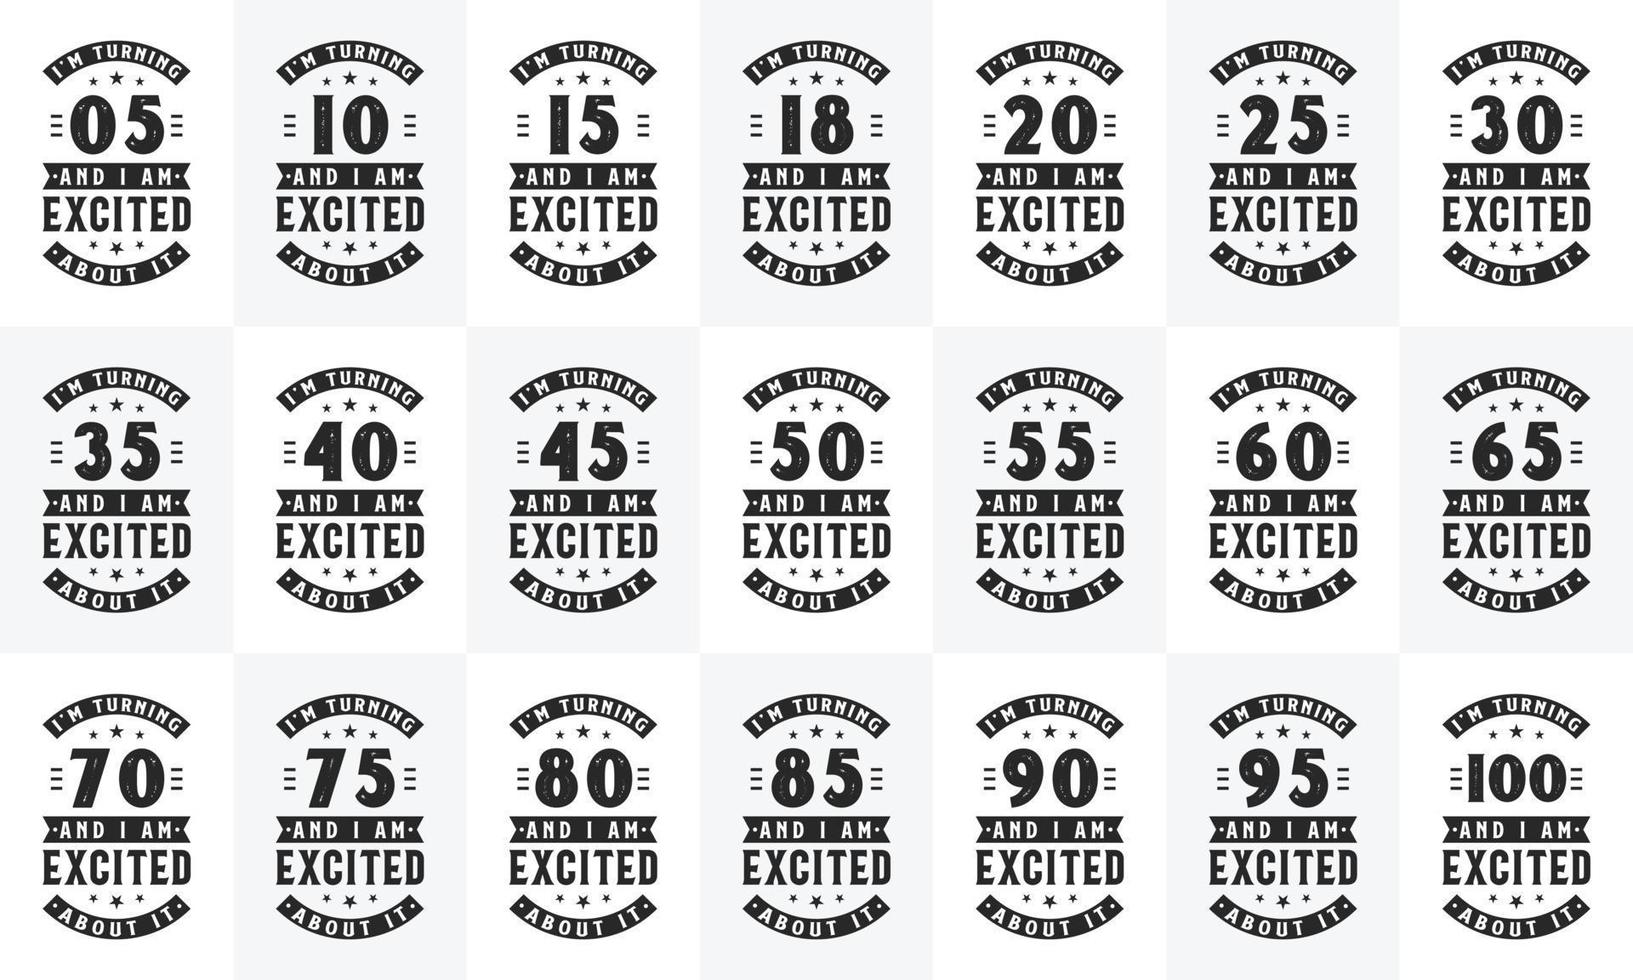 Happy Birthday design bundle. Retro Vintage Birthday Typography bundle. Don't be Jealous just because I'm 5, 10, 15, 10, 15, 20, 25, 30, 35, 40, 45, 50, 55, 60, 65, 70, 75, 80, 85, 90, 95, 100 vector